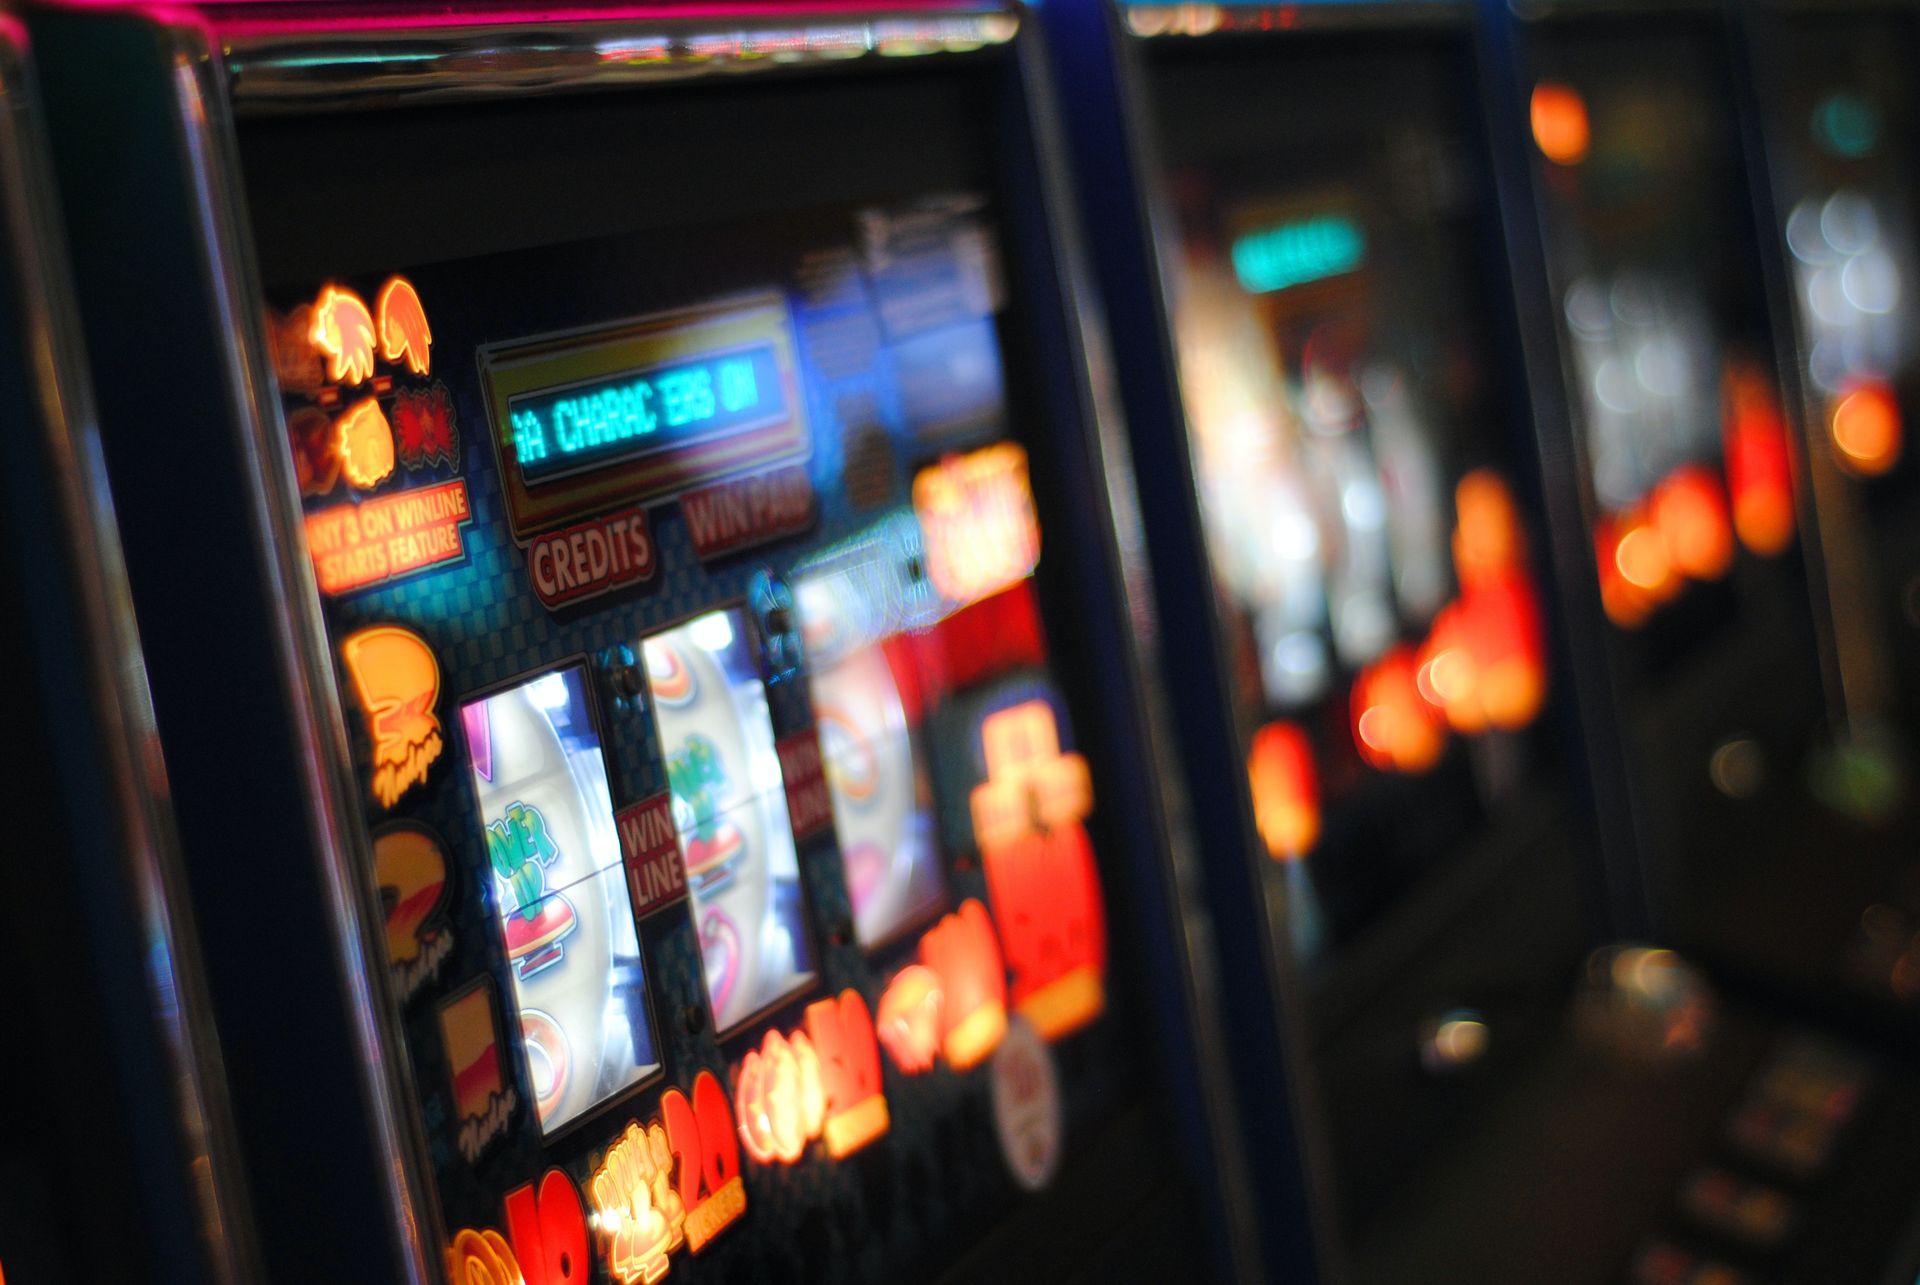 UK Gambling addiction crisis Luke Ashton's story